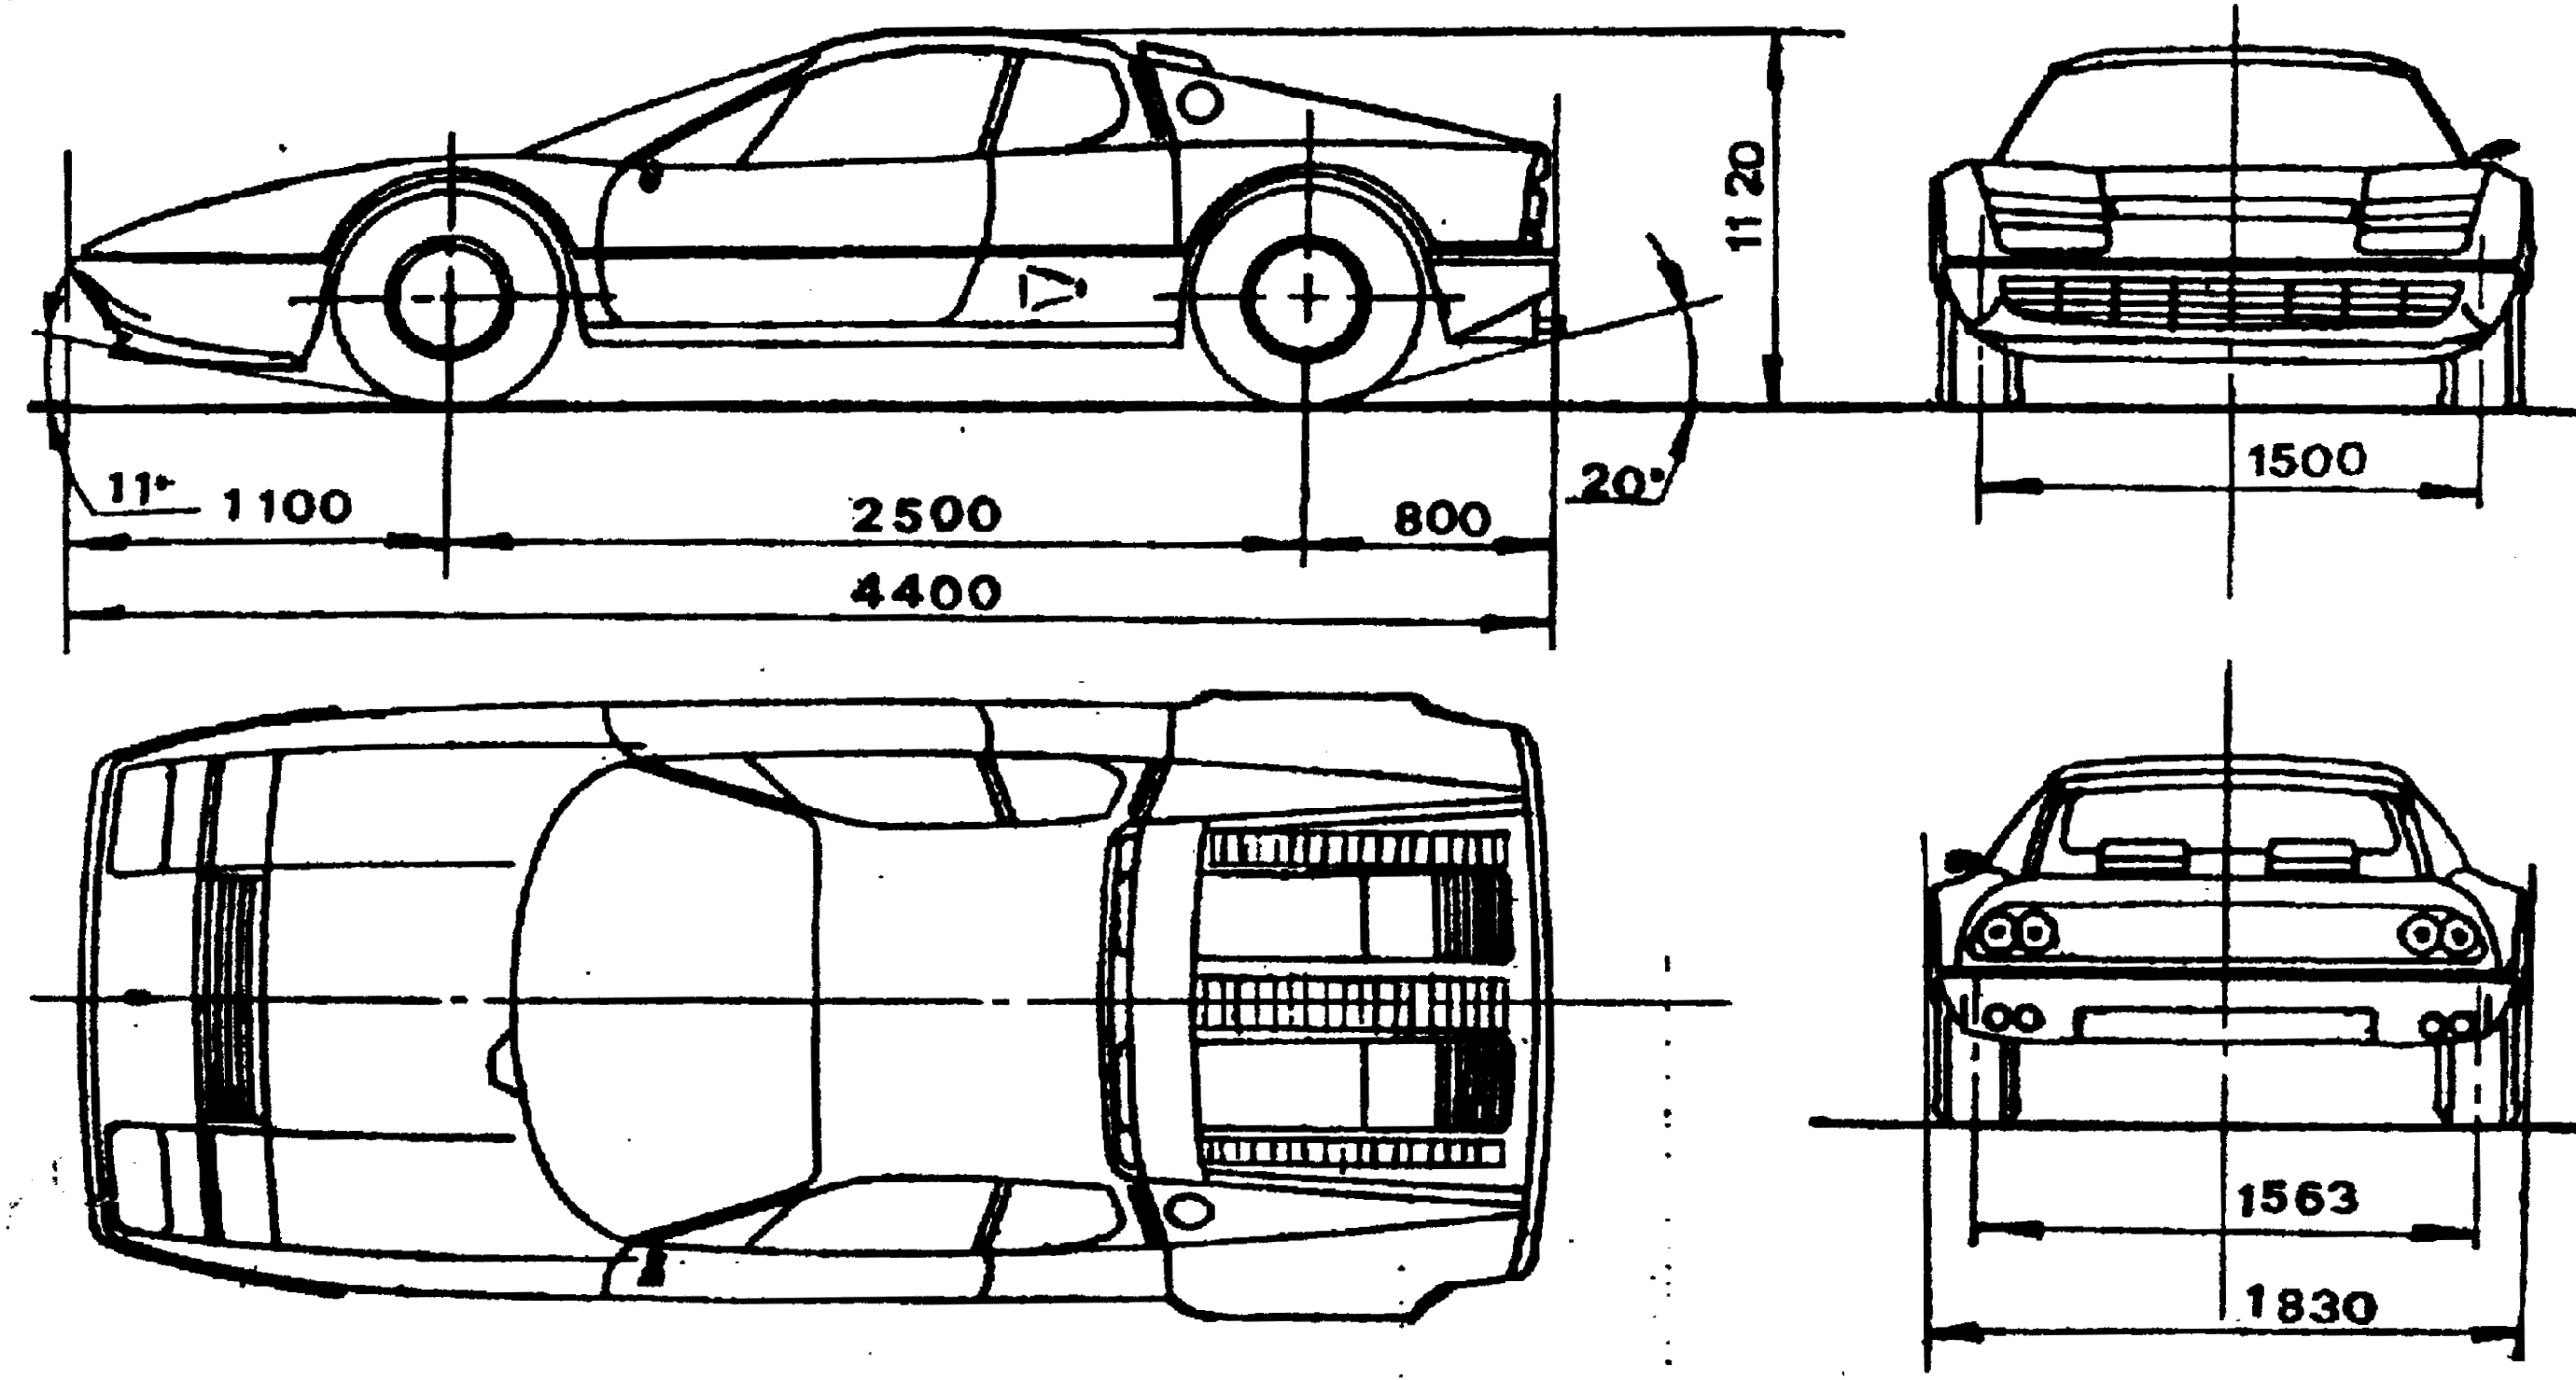 http://carblueprints.info/blueprints/ferrari/ferrari-512bb-1976.gif